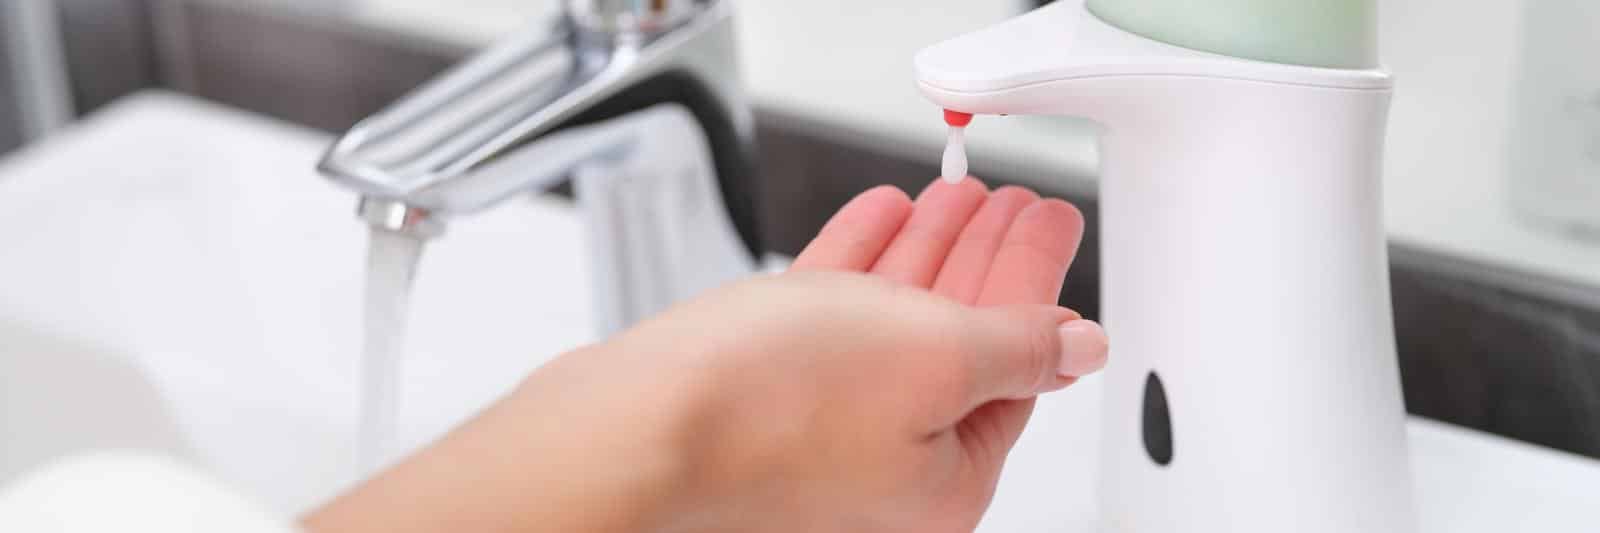 Automatic Soap Dispensers Hygienedunia